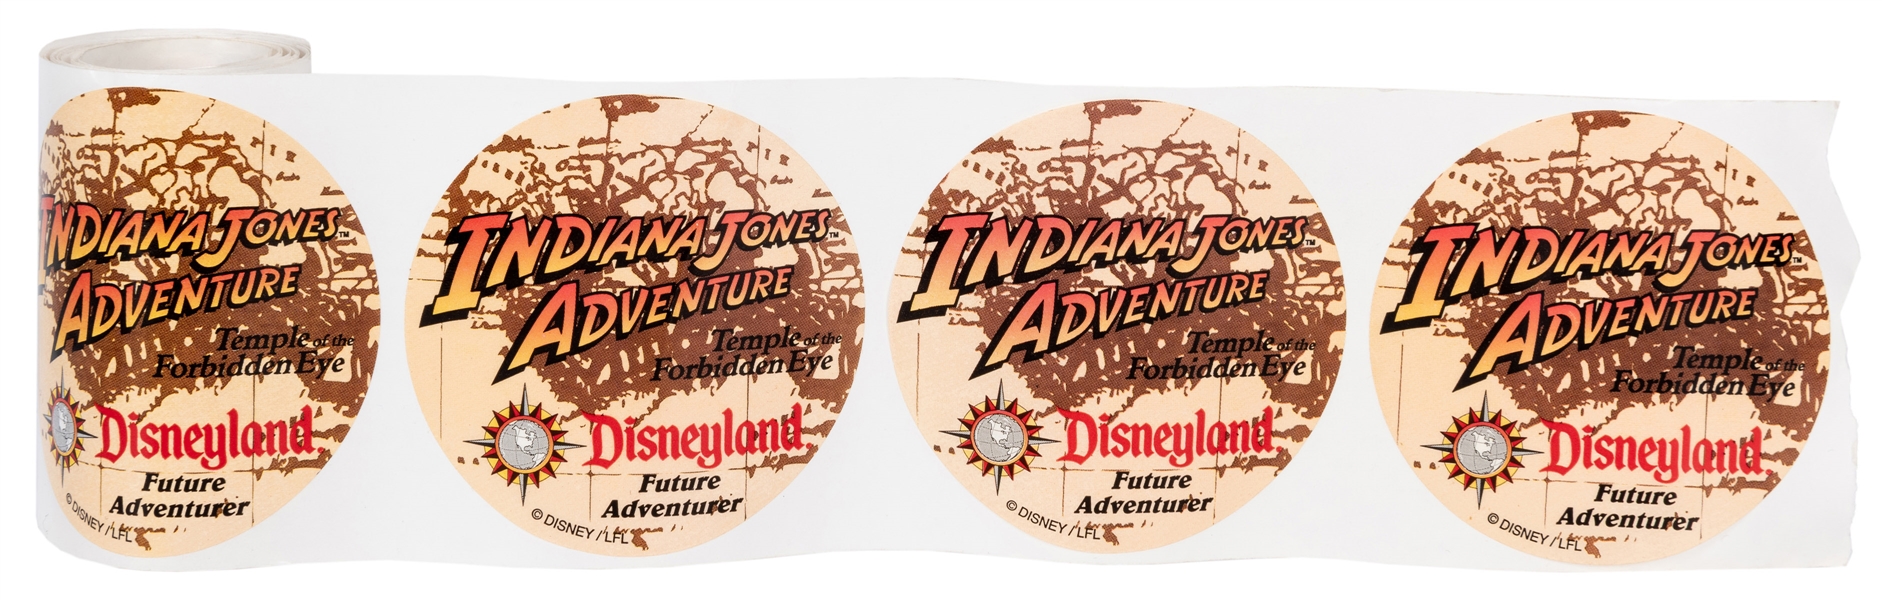 Roll of Indiana Jones “Future Adventurer” Stickers.